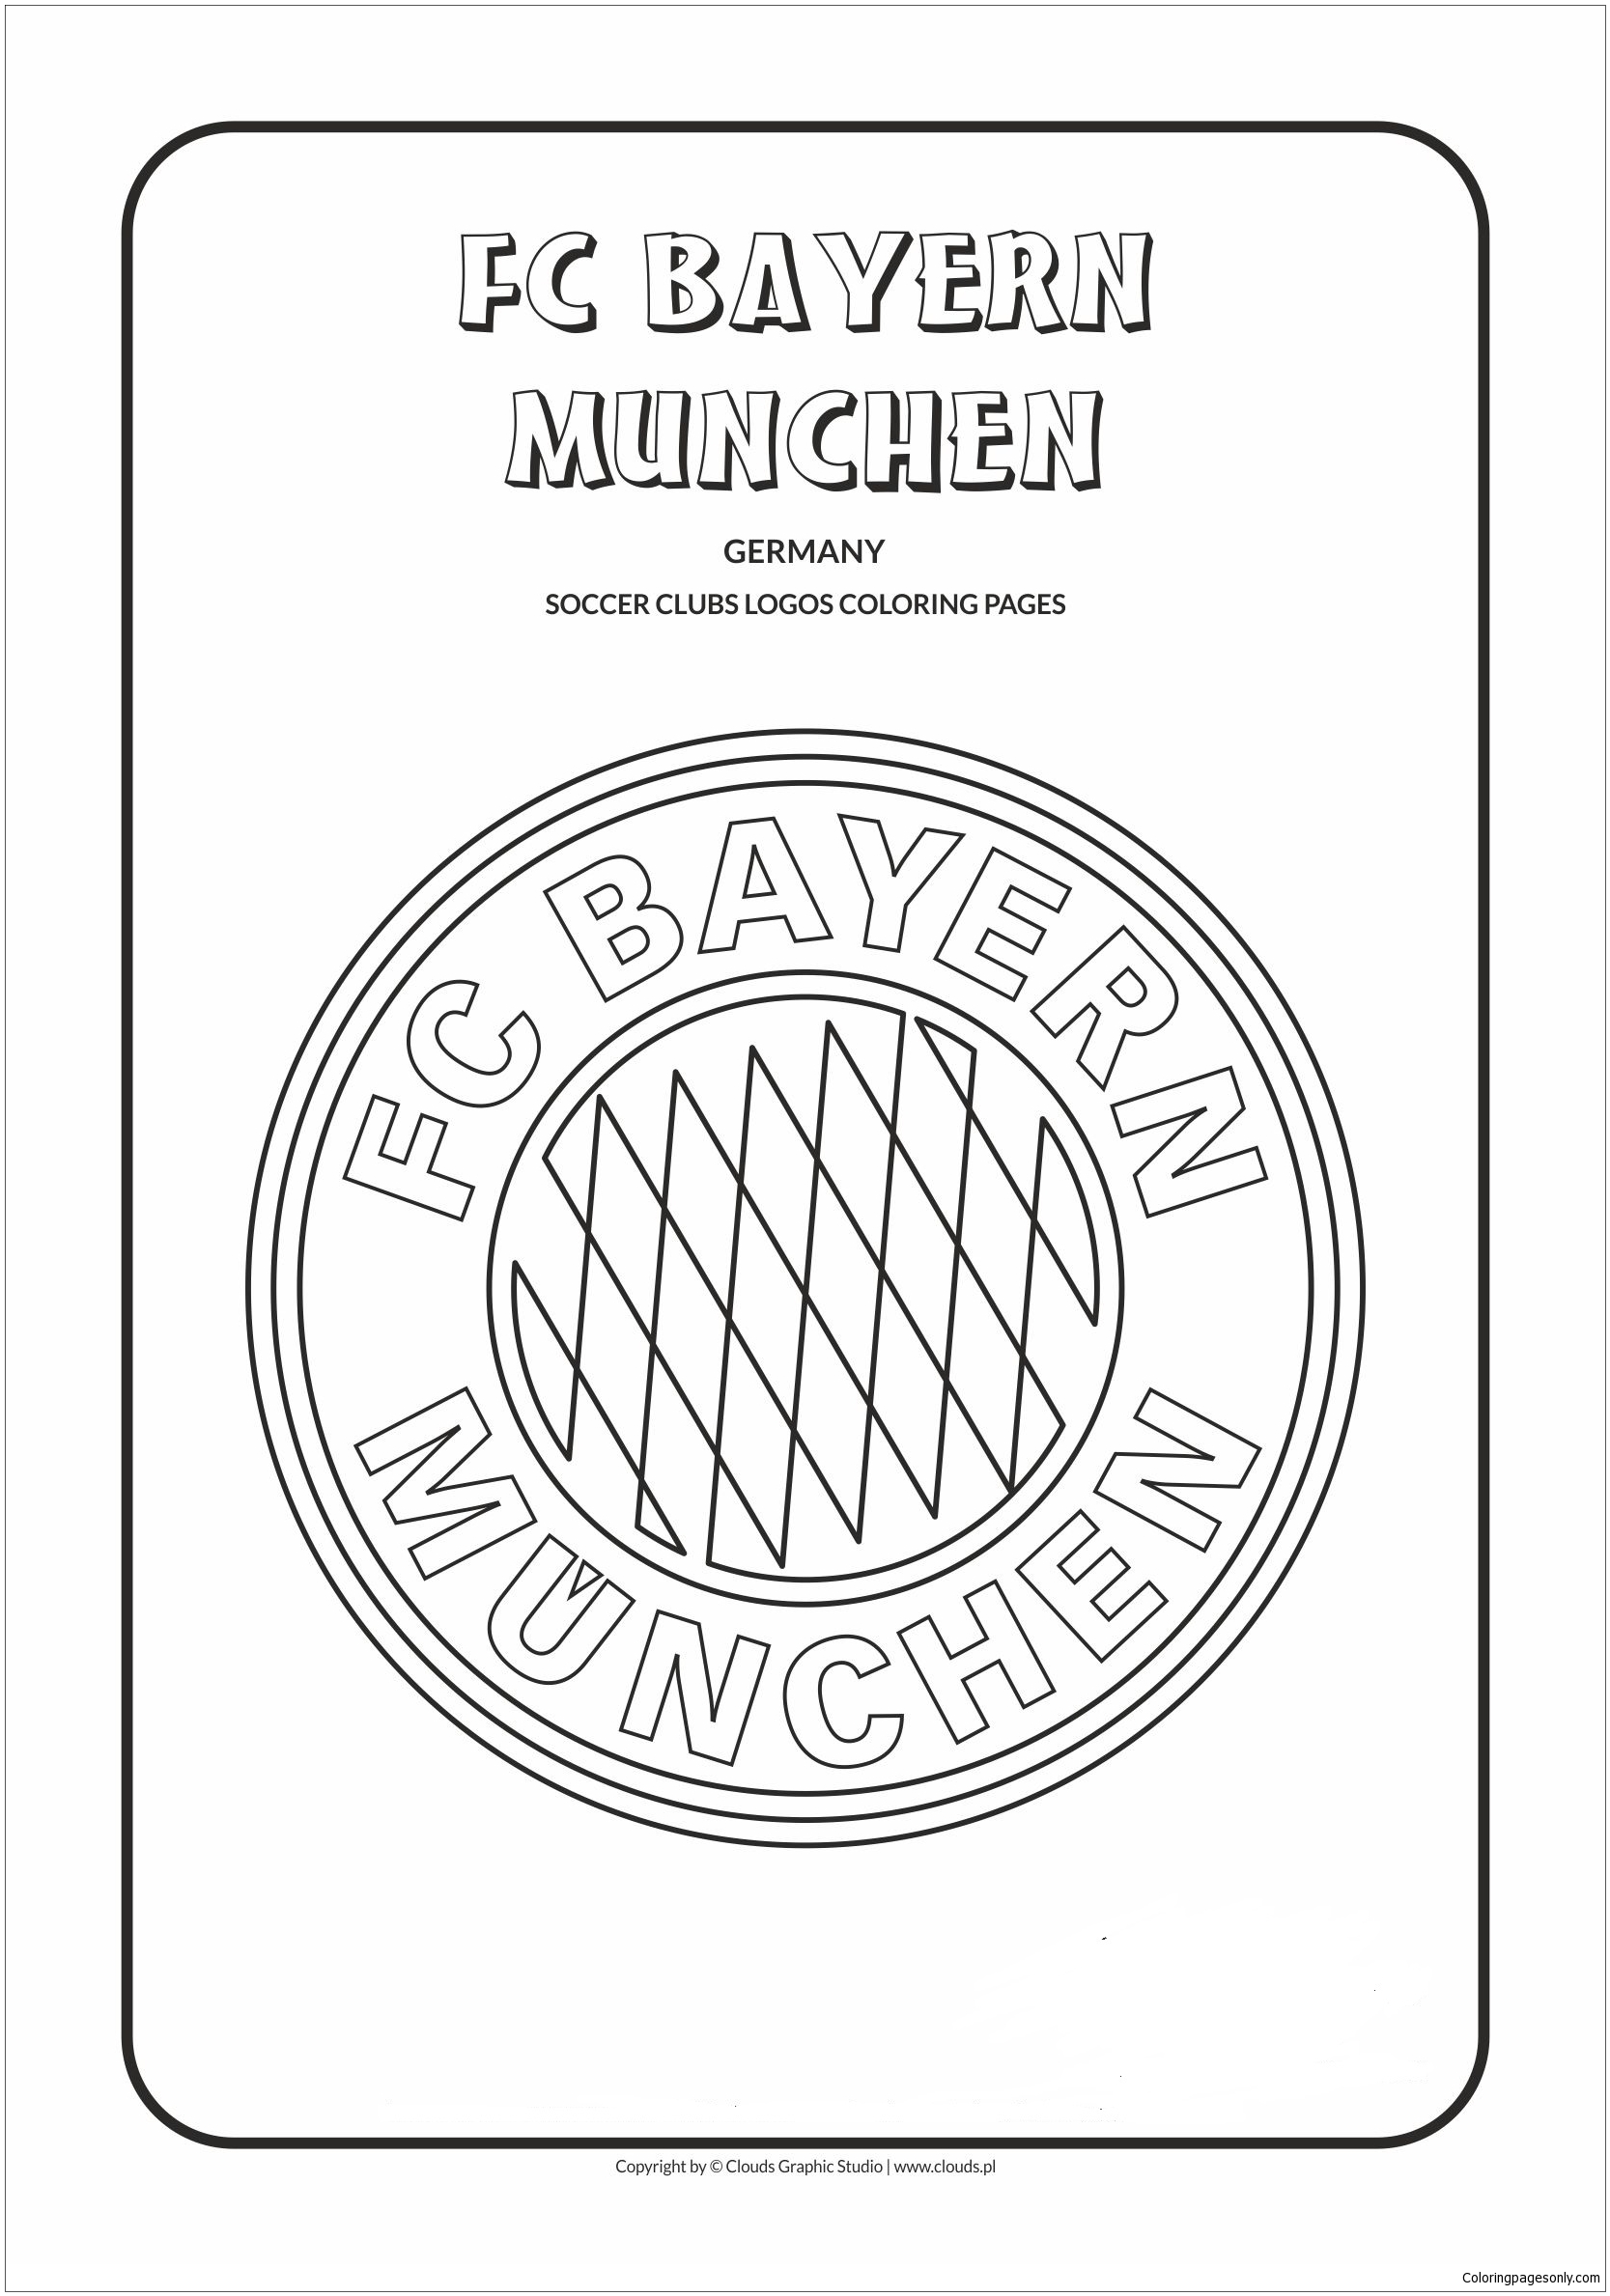 FC Bayern Munchen dos logotipos da equipe alemã da Bundesliga